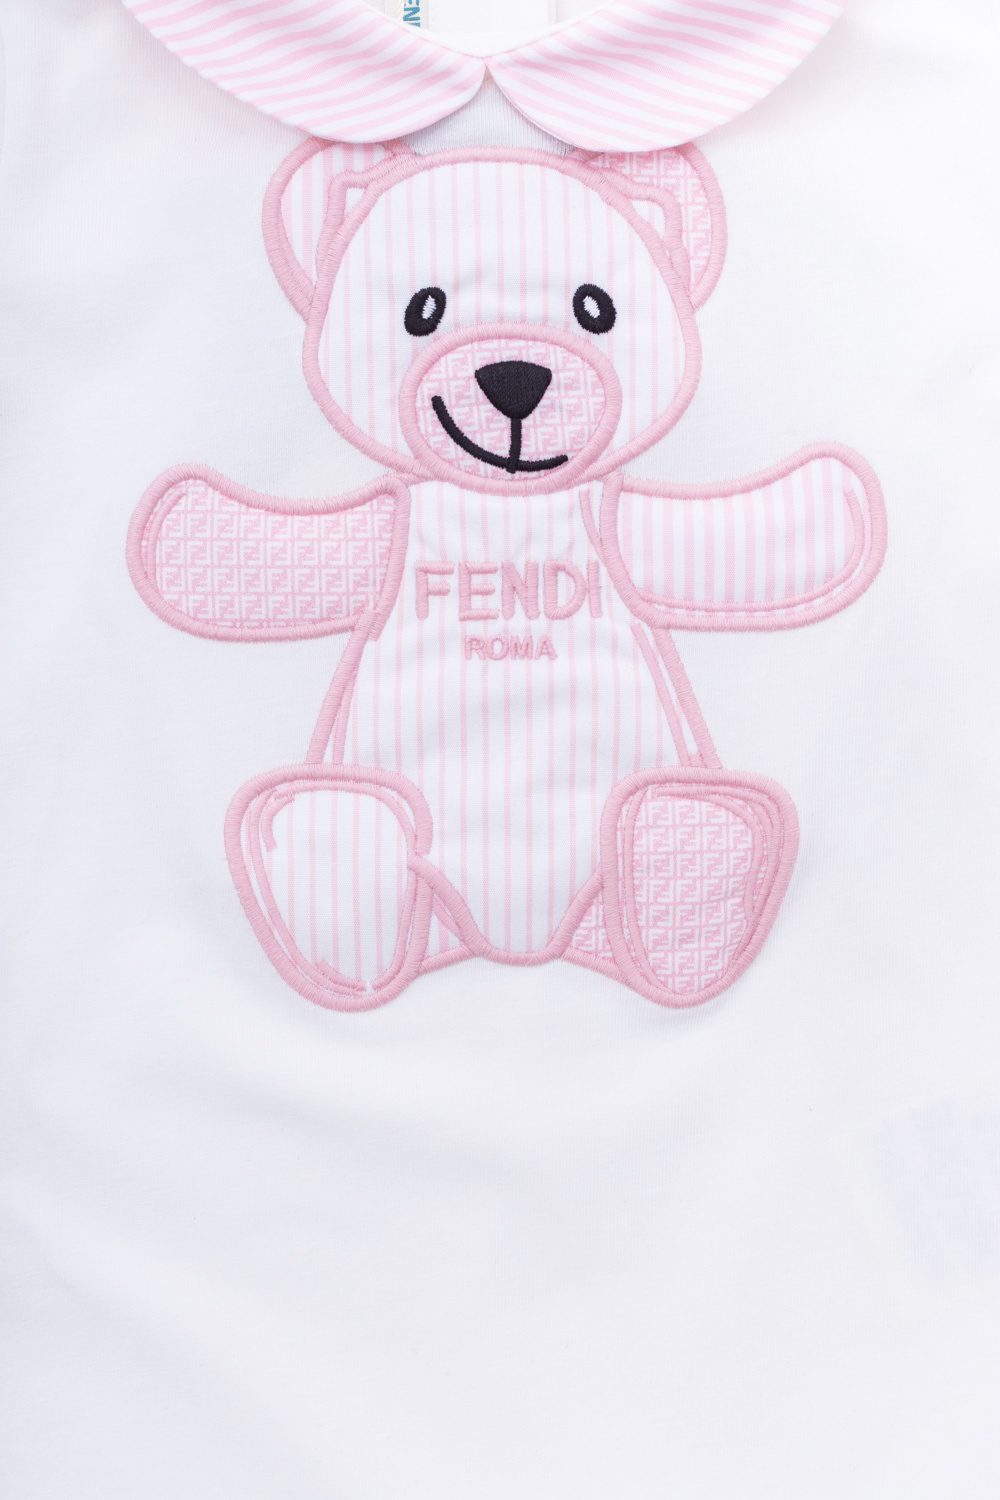 Fendi Kids logo t shirt sleeve fendi t shirt aaod